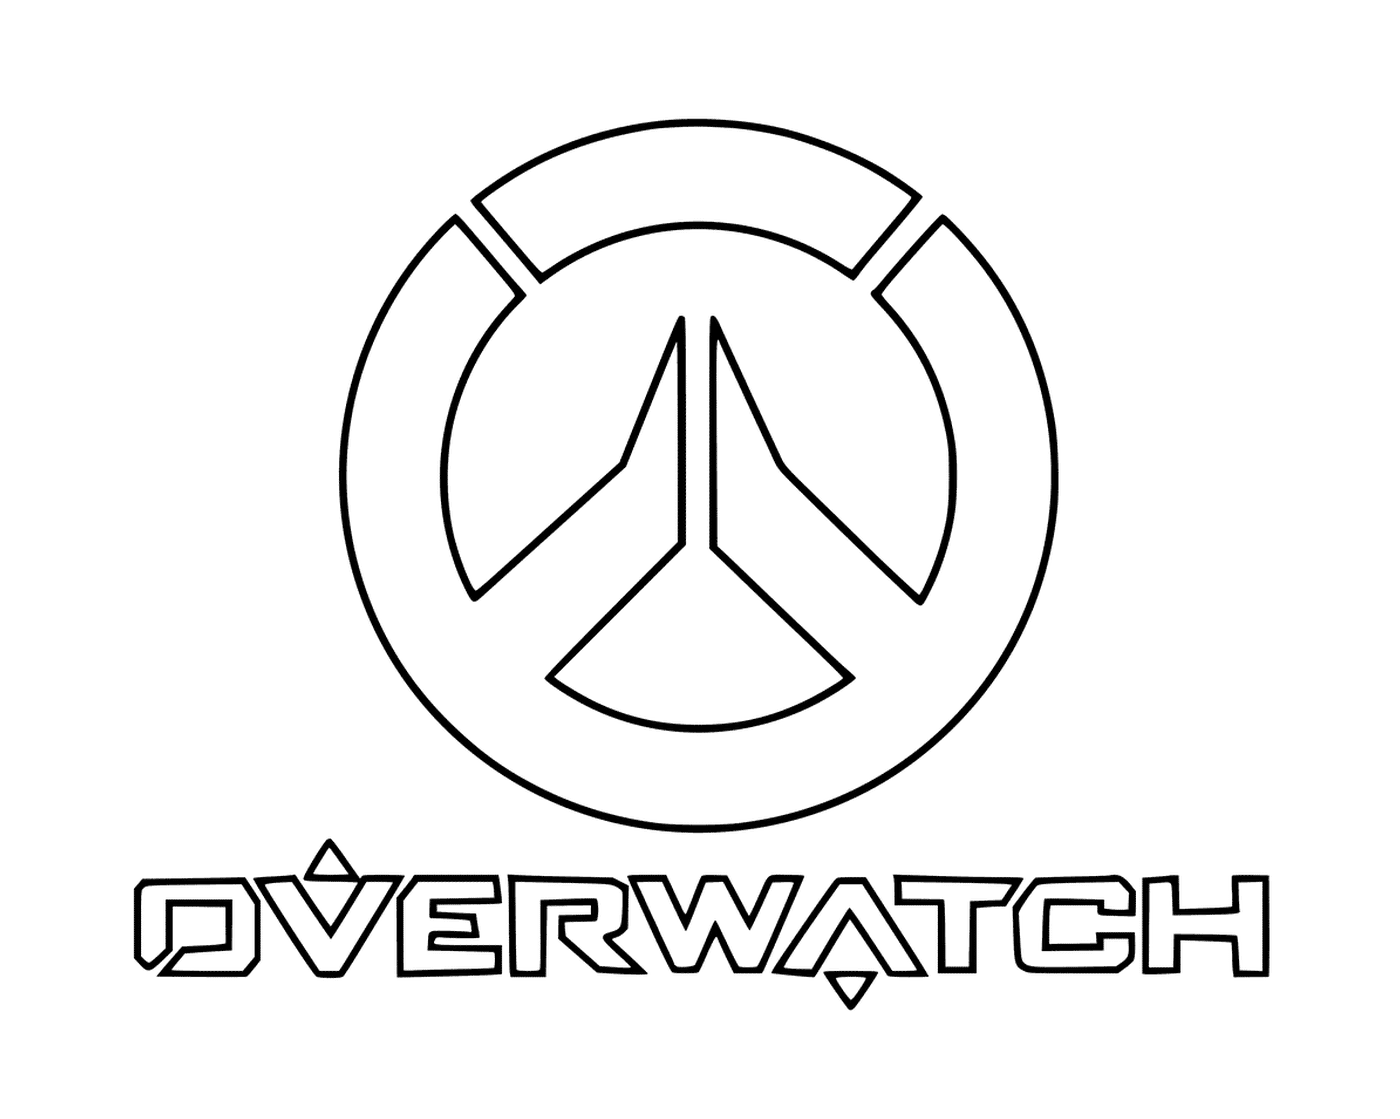  Overwatch logo 